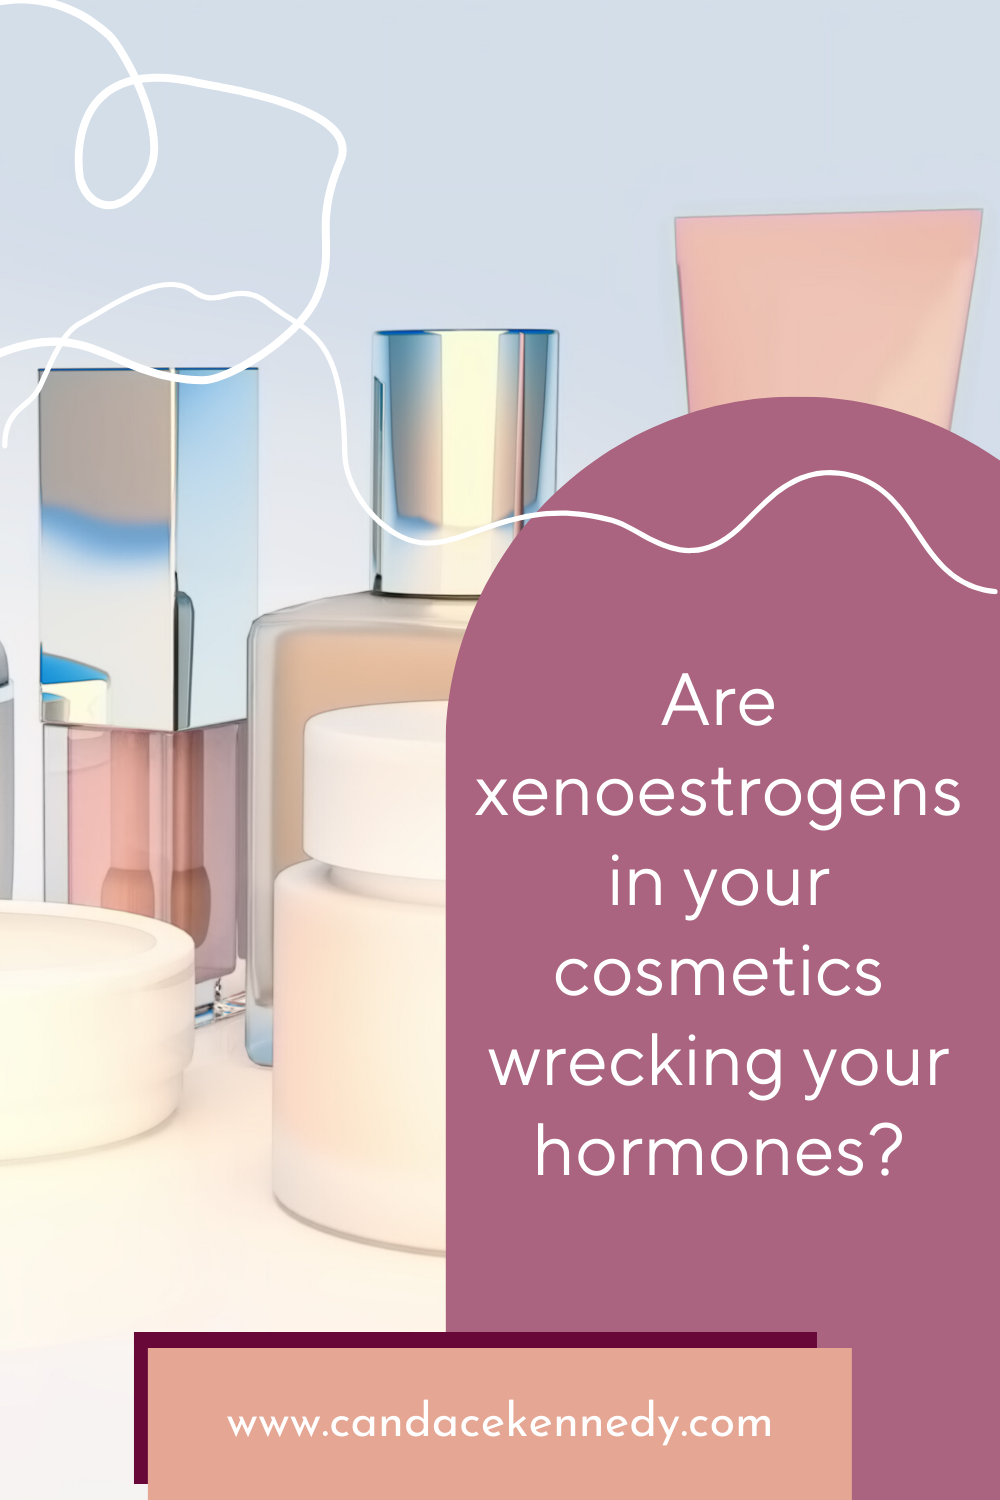 xenoestrogens in cosmetics are wrecking your hormones